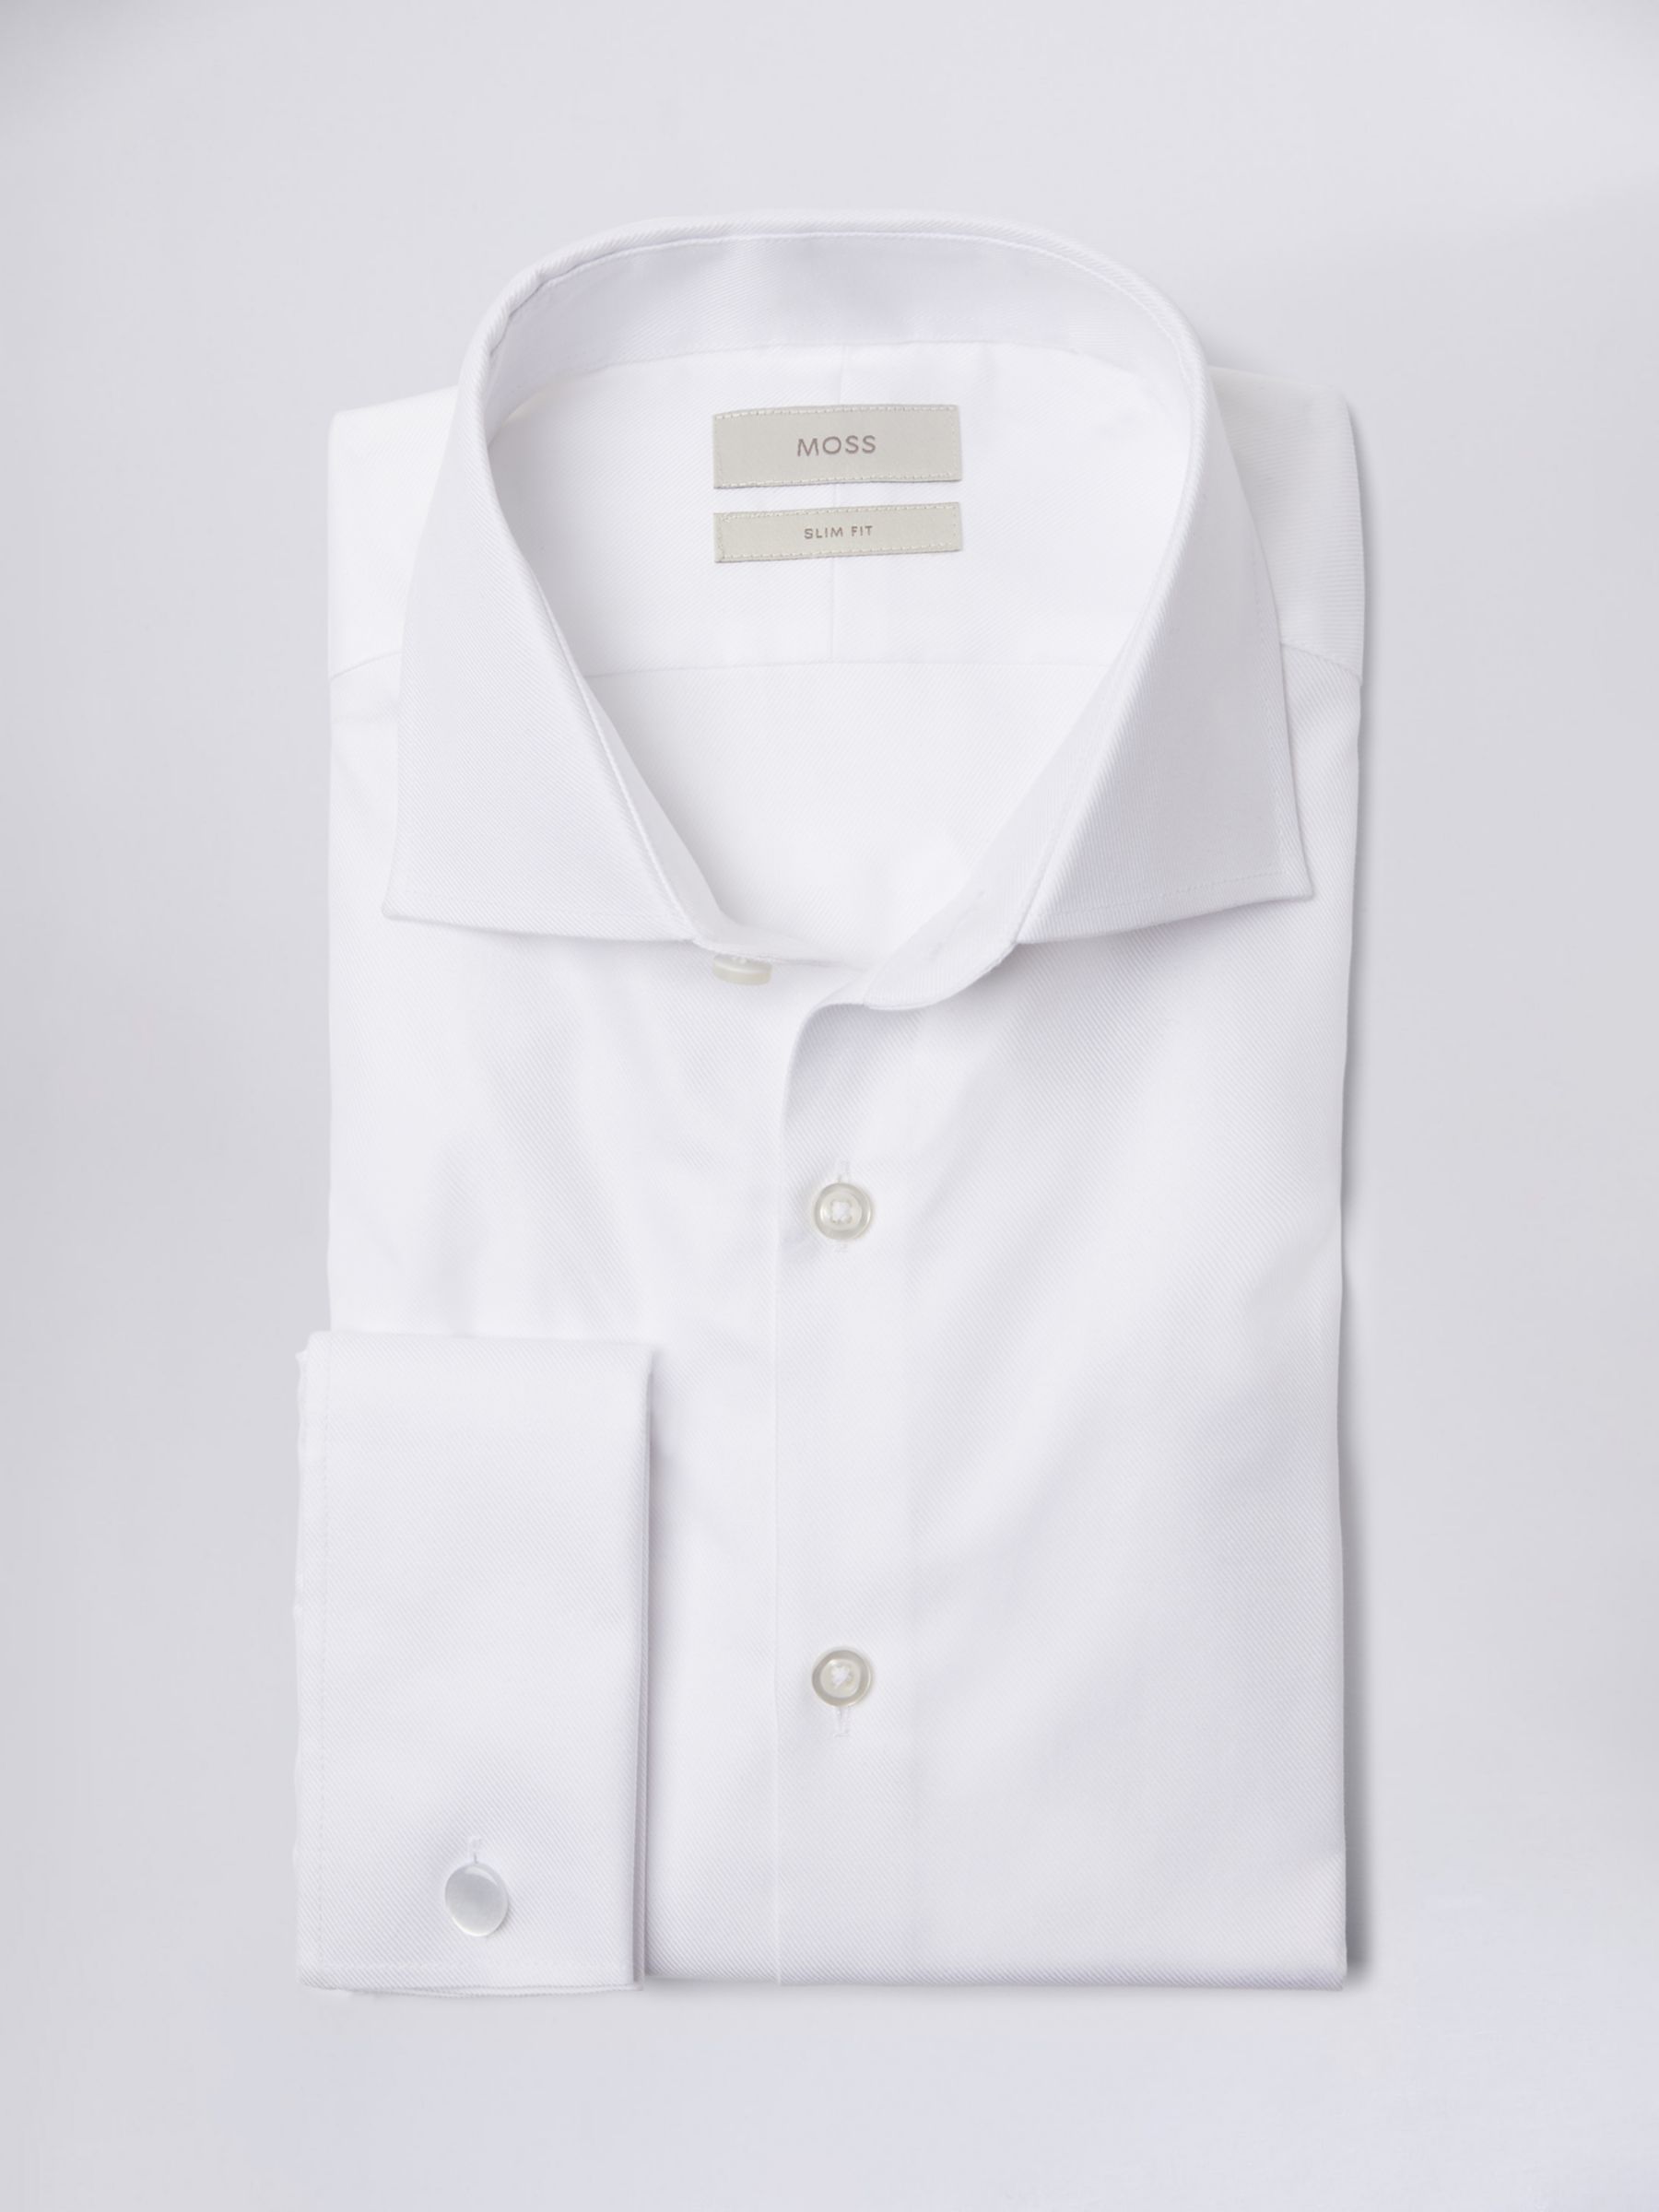 Moss Slim Fit Double Cuff Twill Shirt, White, 13.5